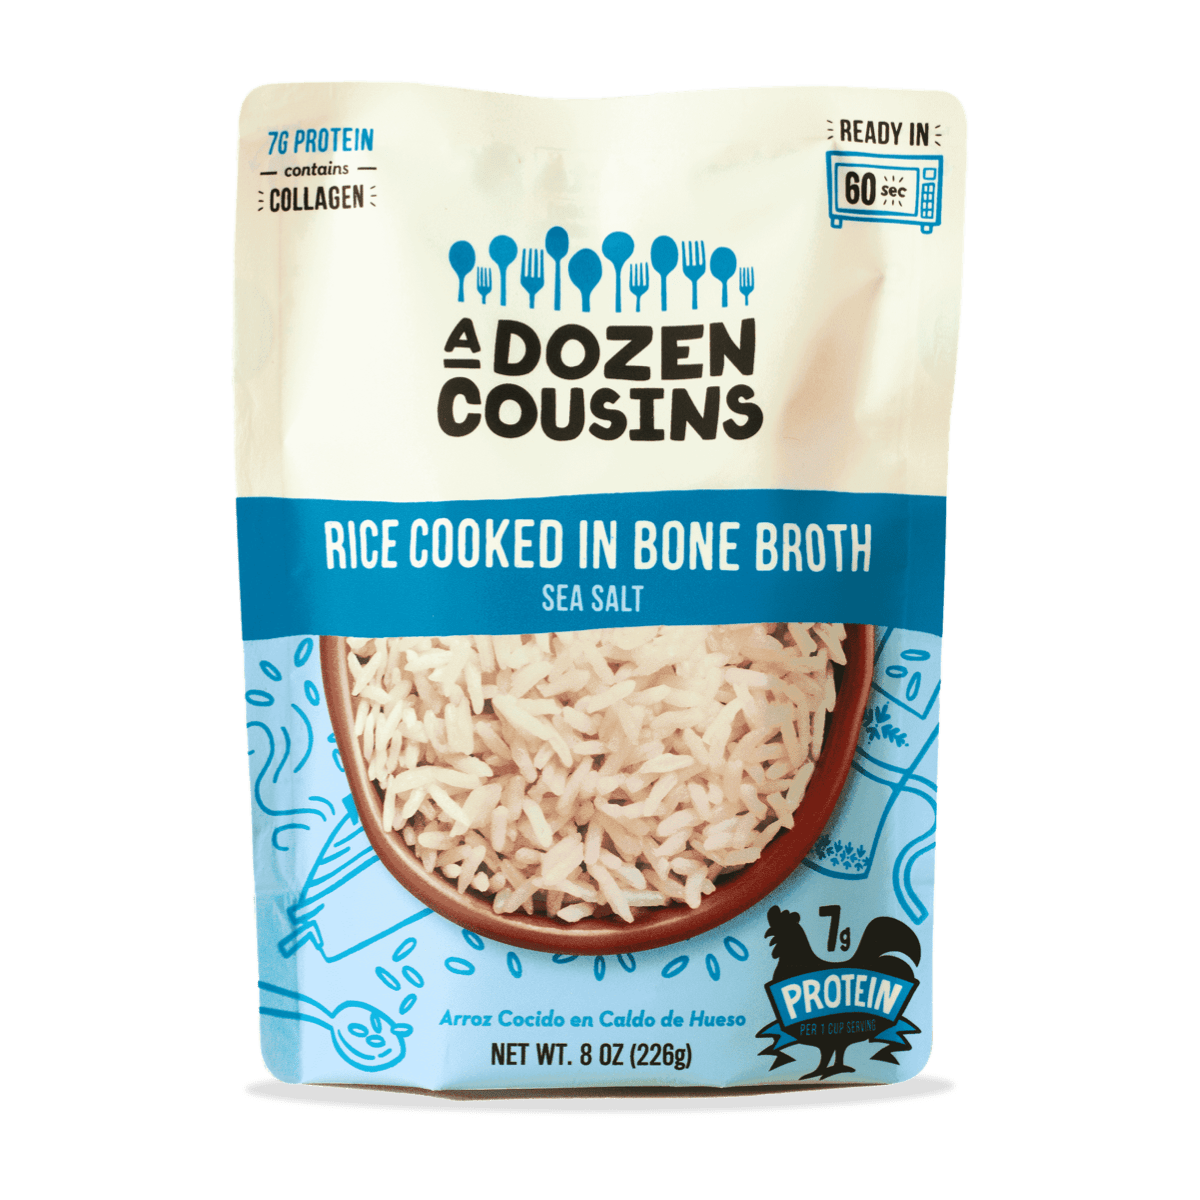 [A Dozen Cousins] Sea Salt Rice Cooked in Bone Broth